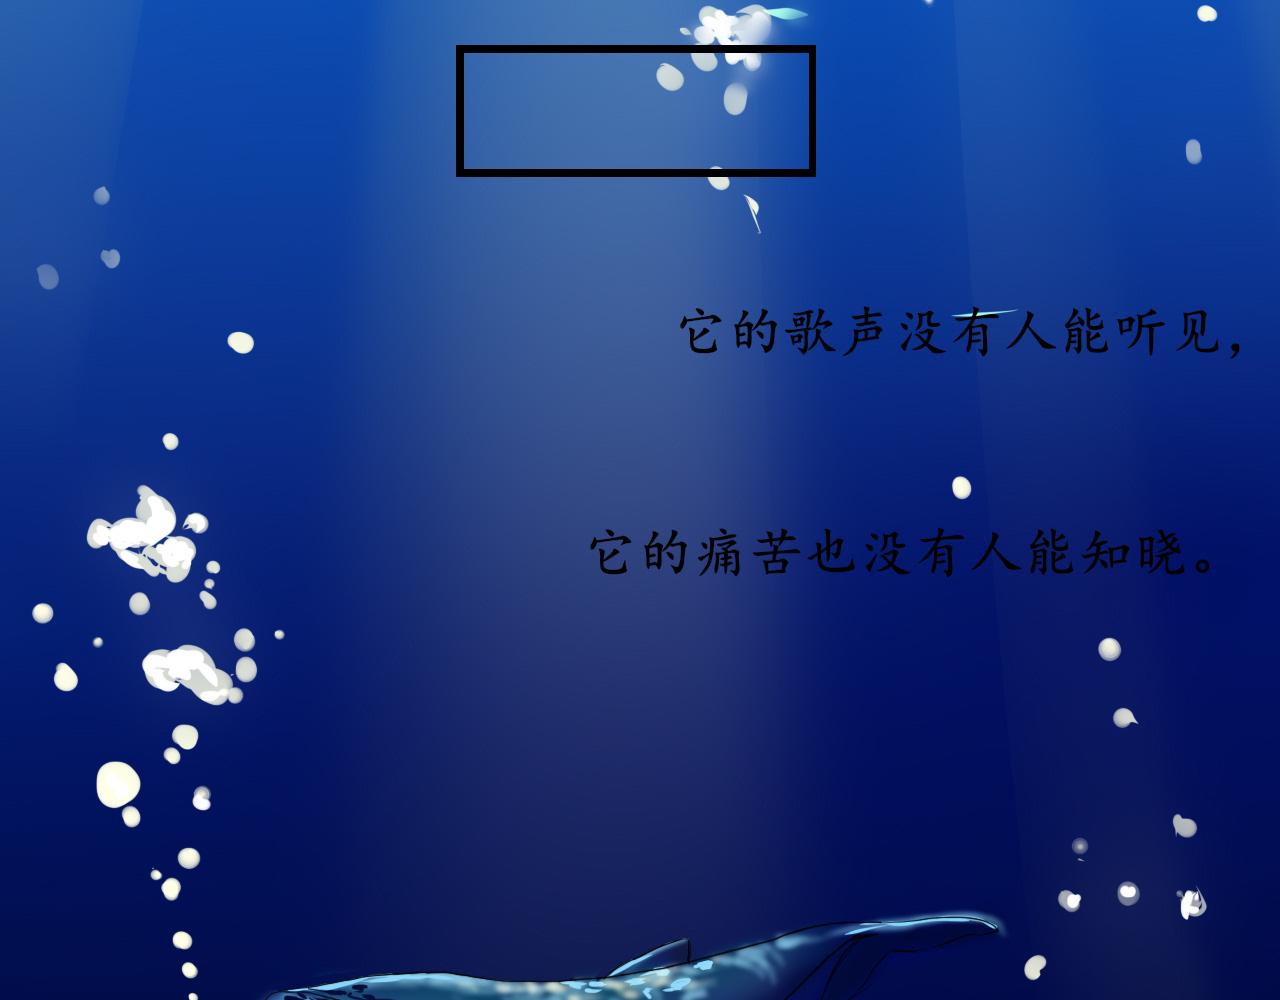 52hz - 1 深海里的鯨魚(1/2) - 3